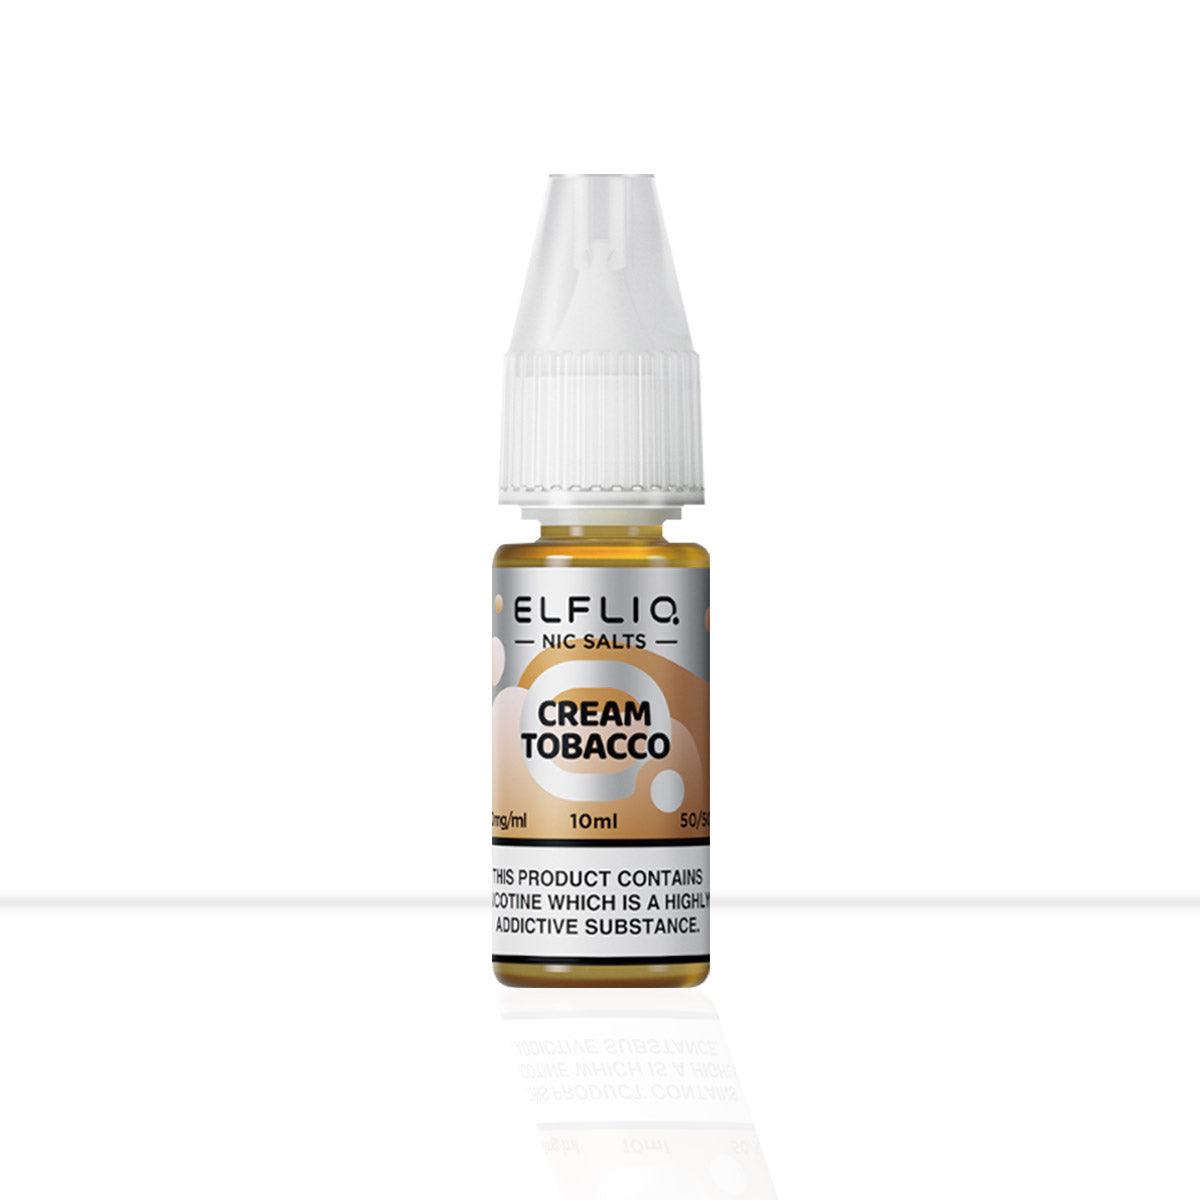 Cream Tobacco Nic Salt E-liquid Elf Bar Elfliq - Cream Tobacco Nic Salt E-liquid Elf Bar Elfliq - E Liquid